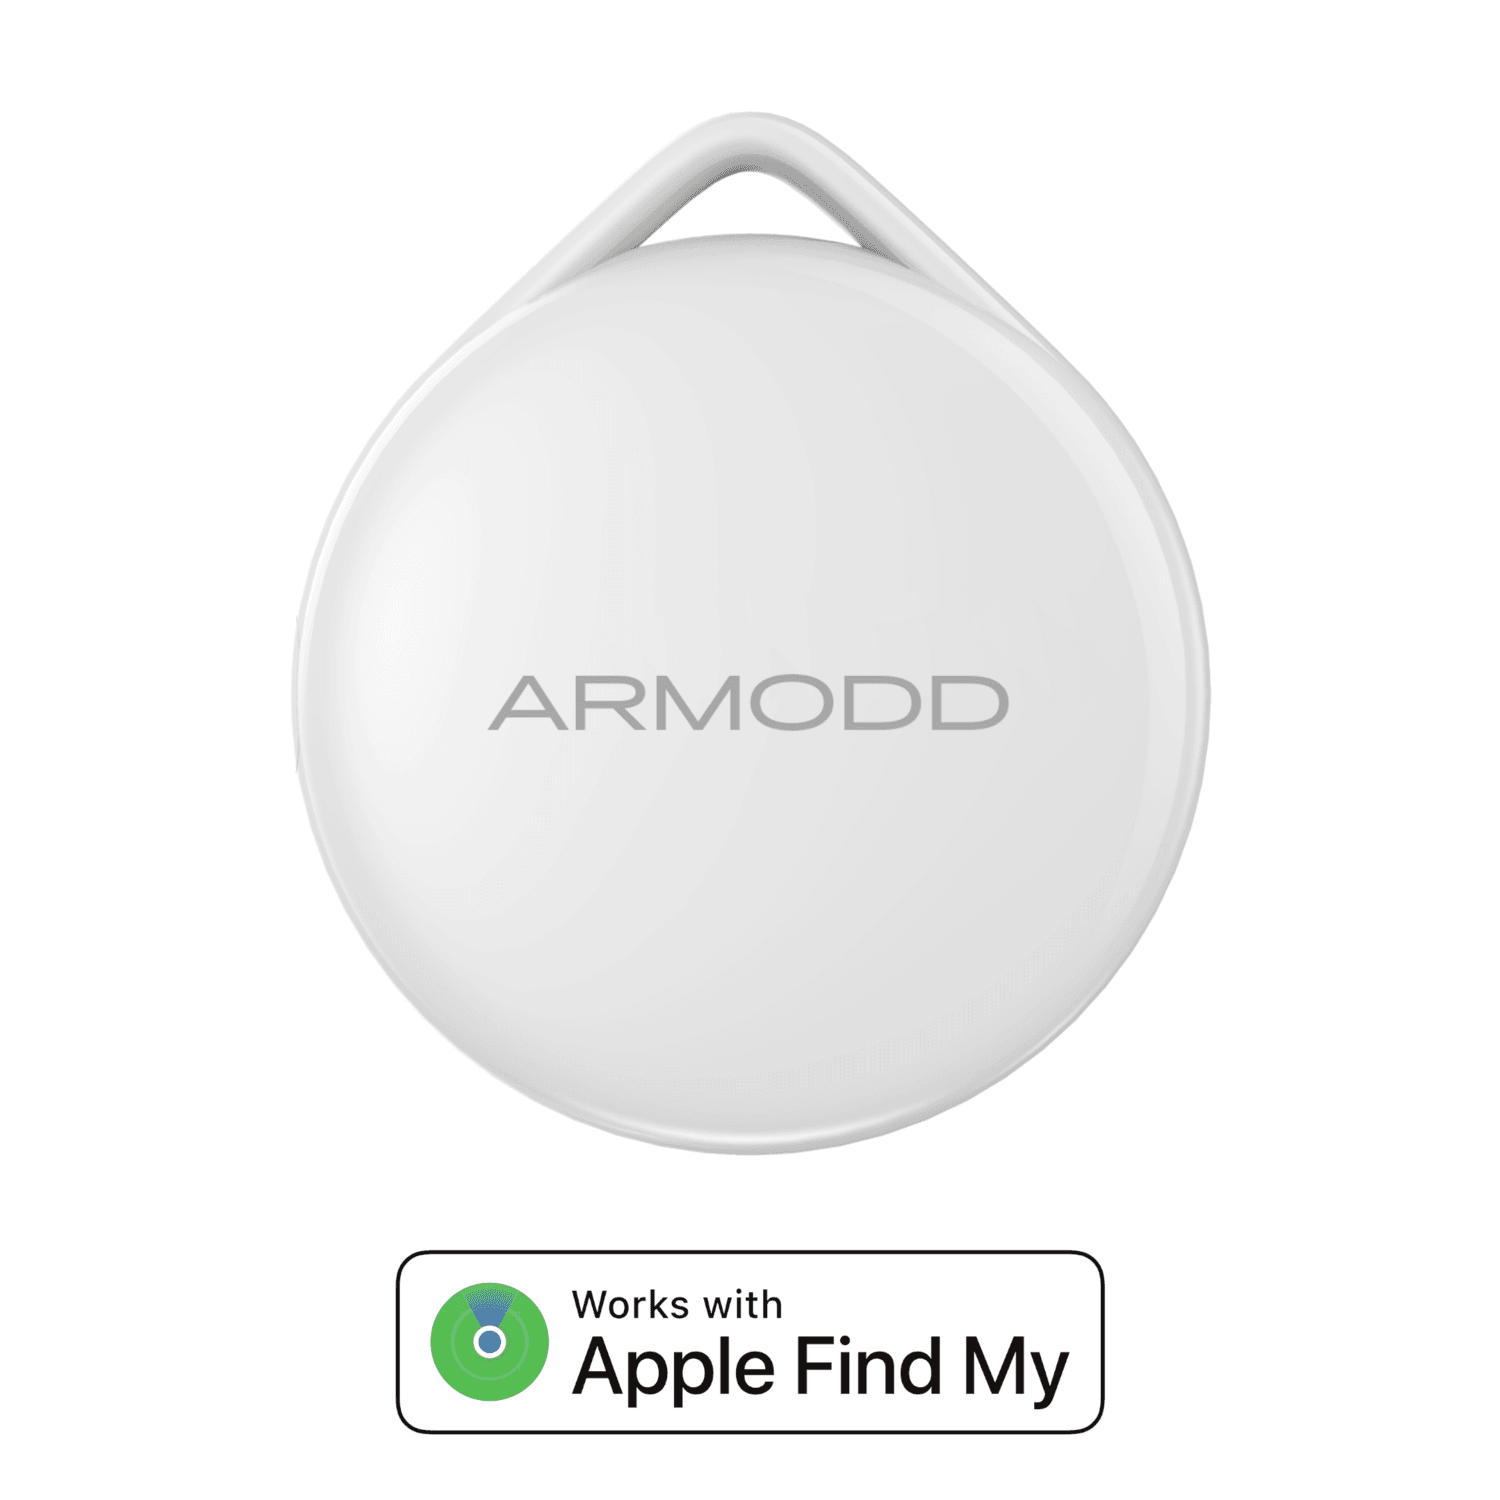 ARMODD iTag bílý (AirTag alternativa) s podporou Apple Find My (Najít)